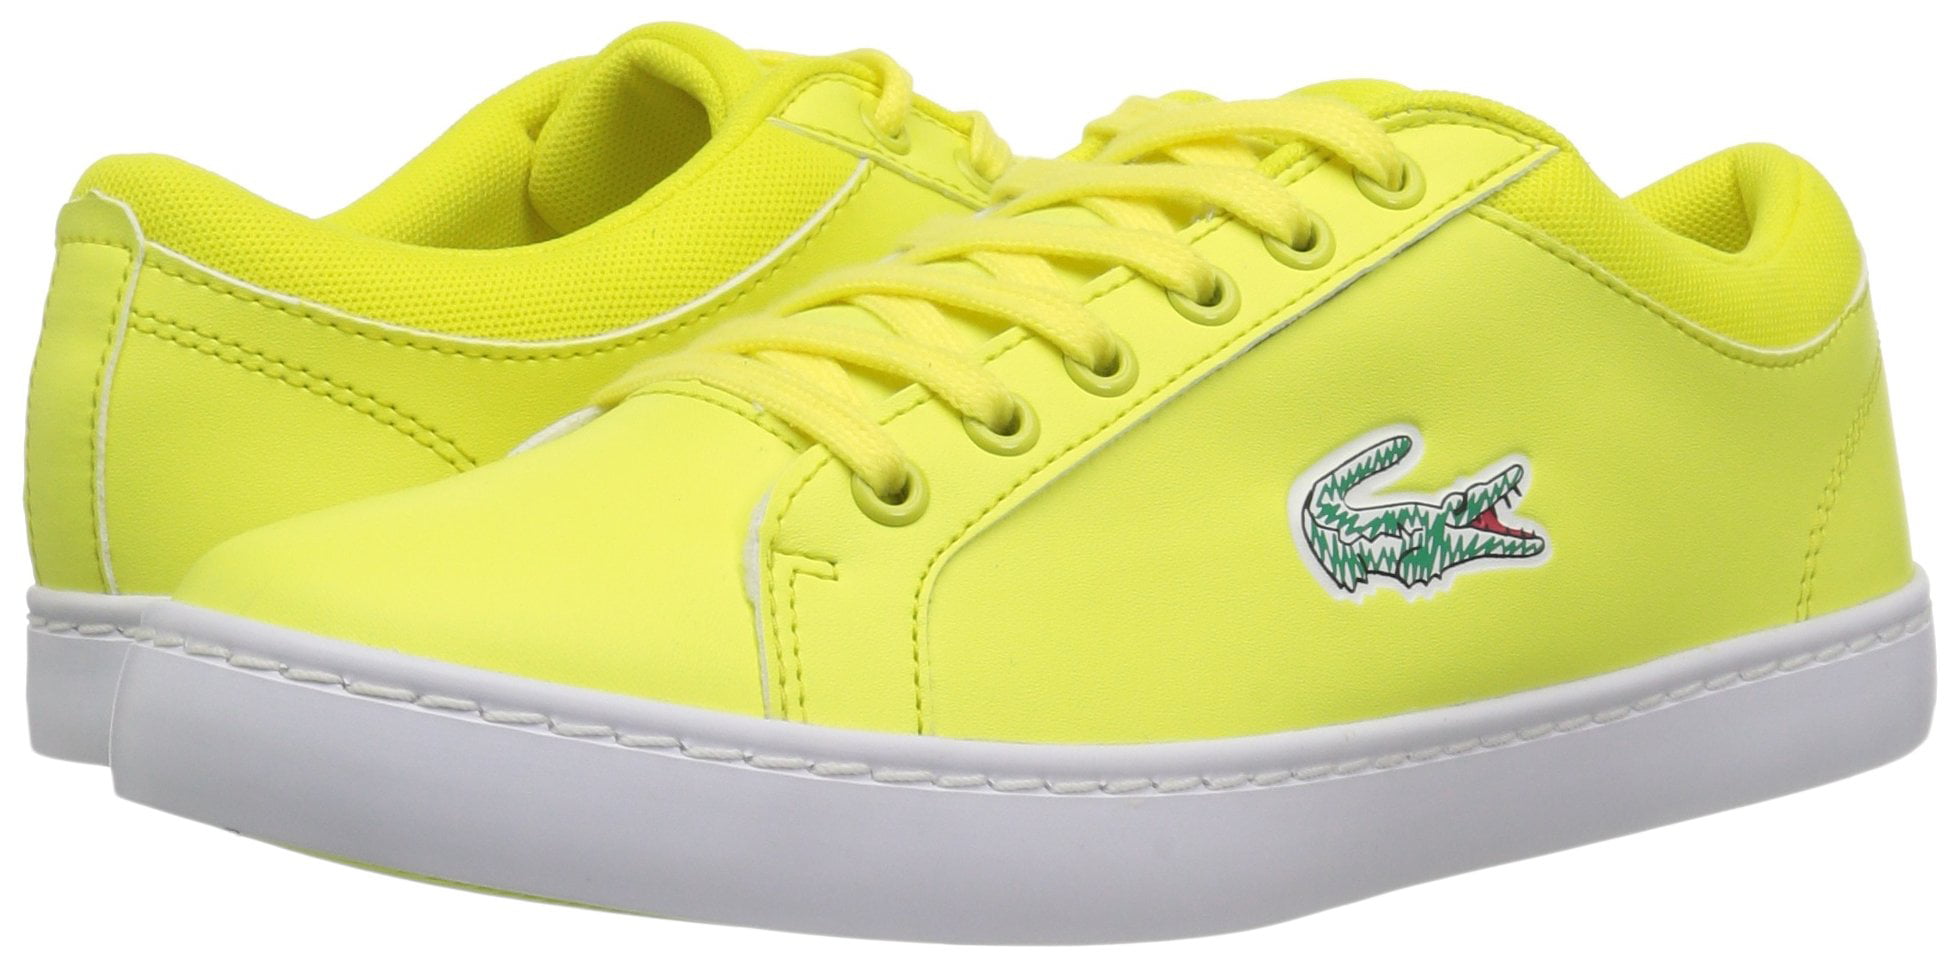 Caj Sneakers Fluro Yellow White 